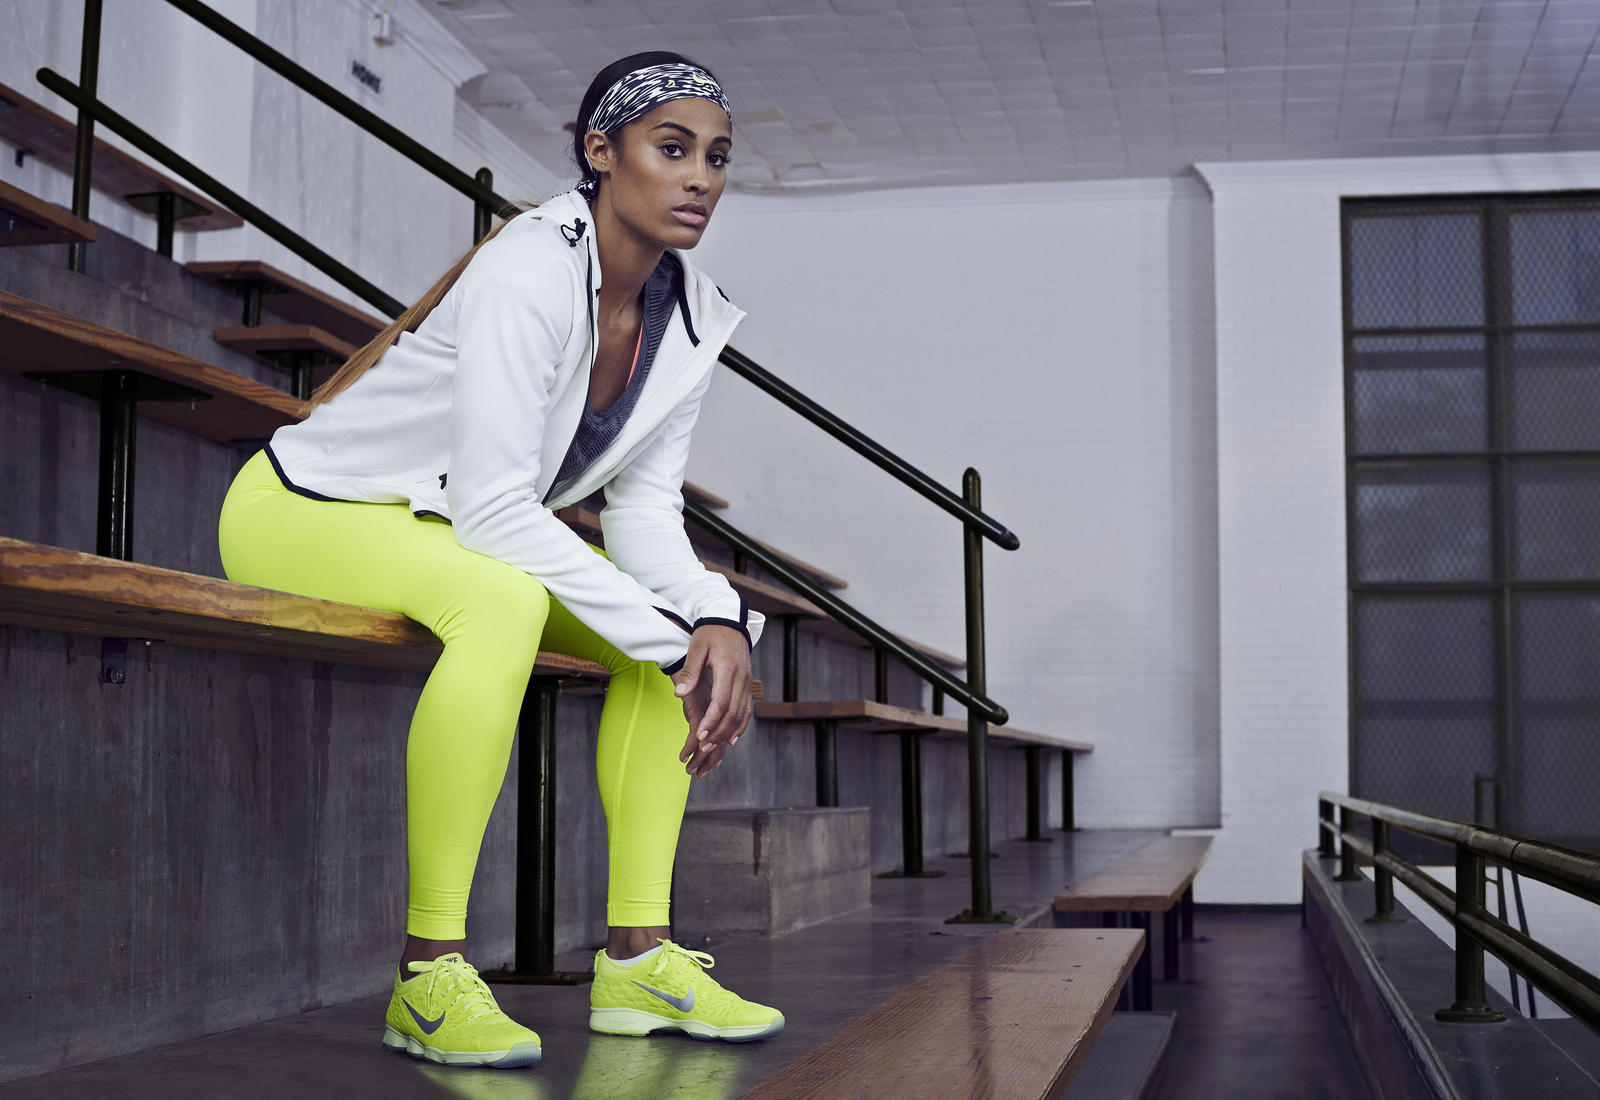 Nike Training Club: The Skylar Diggins “Metabolic Meltdown” Workout ...